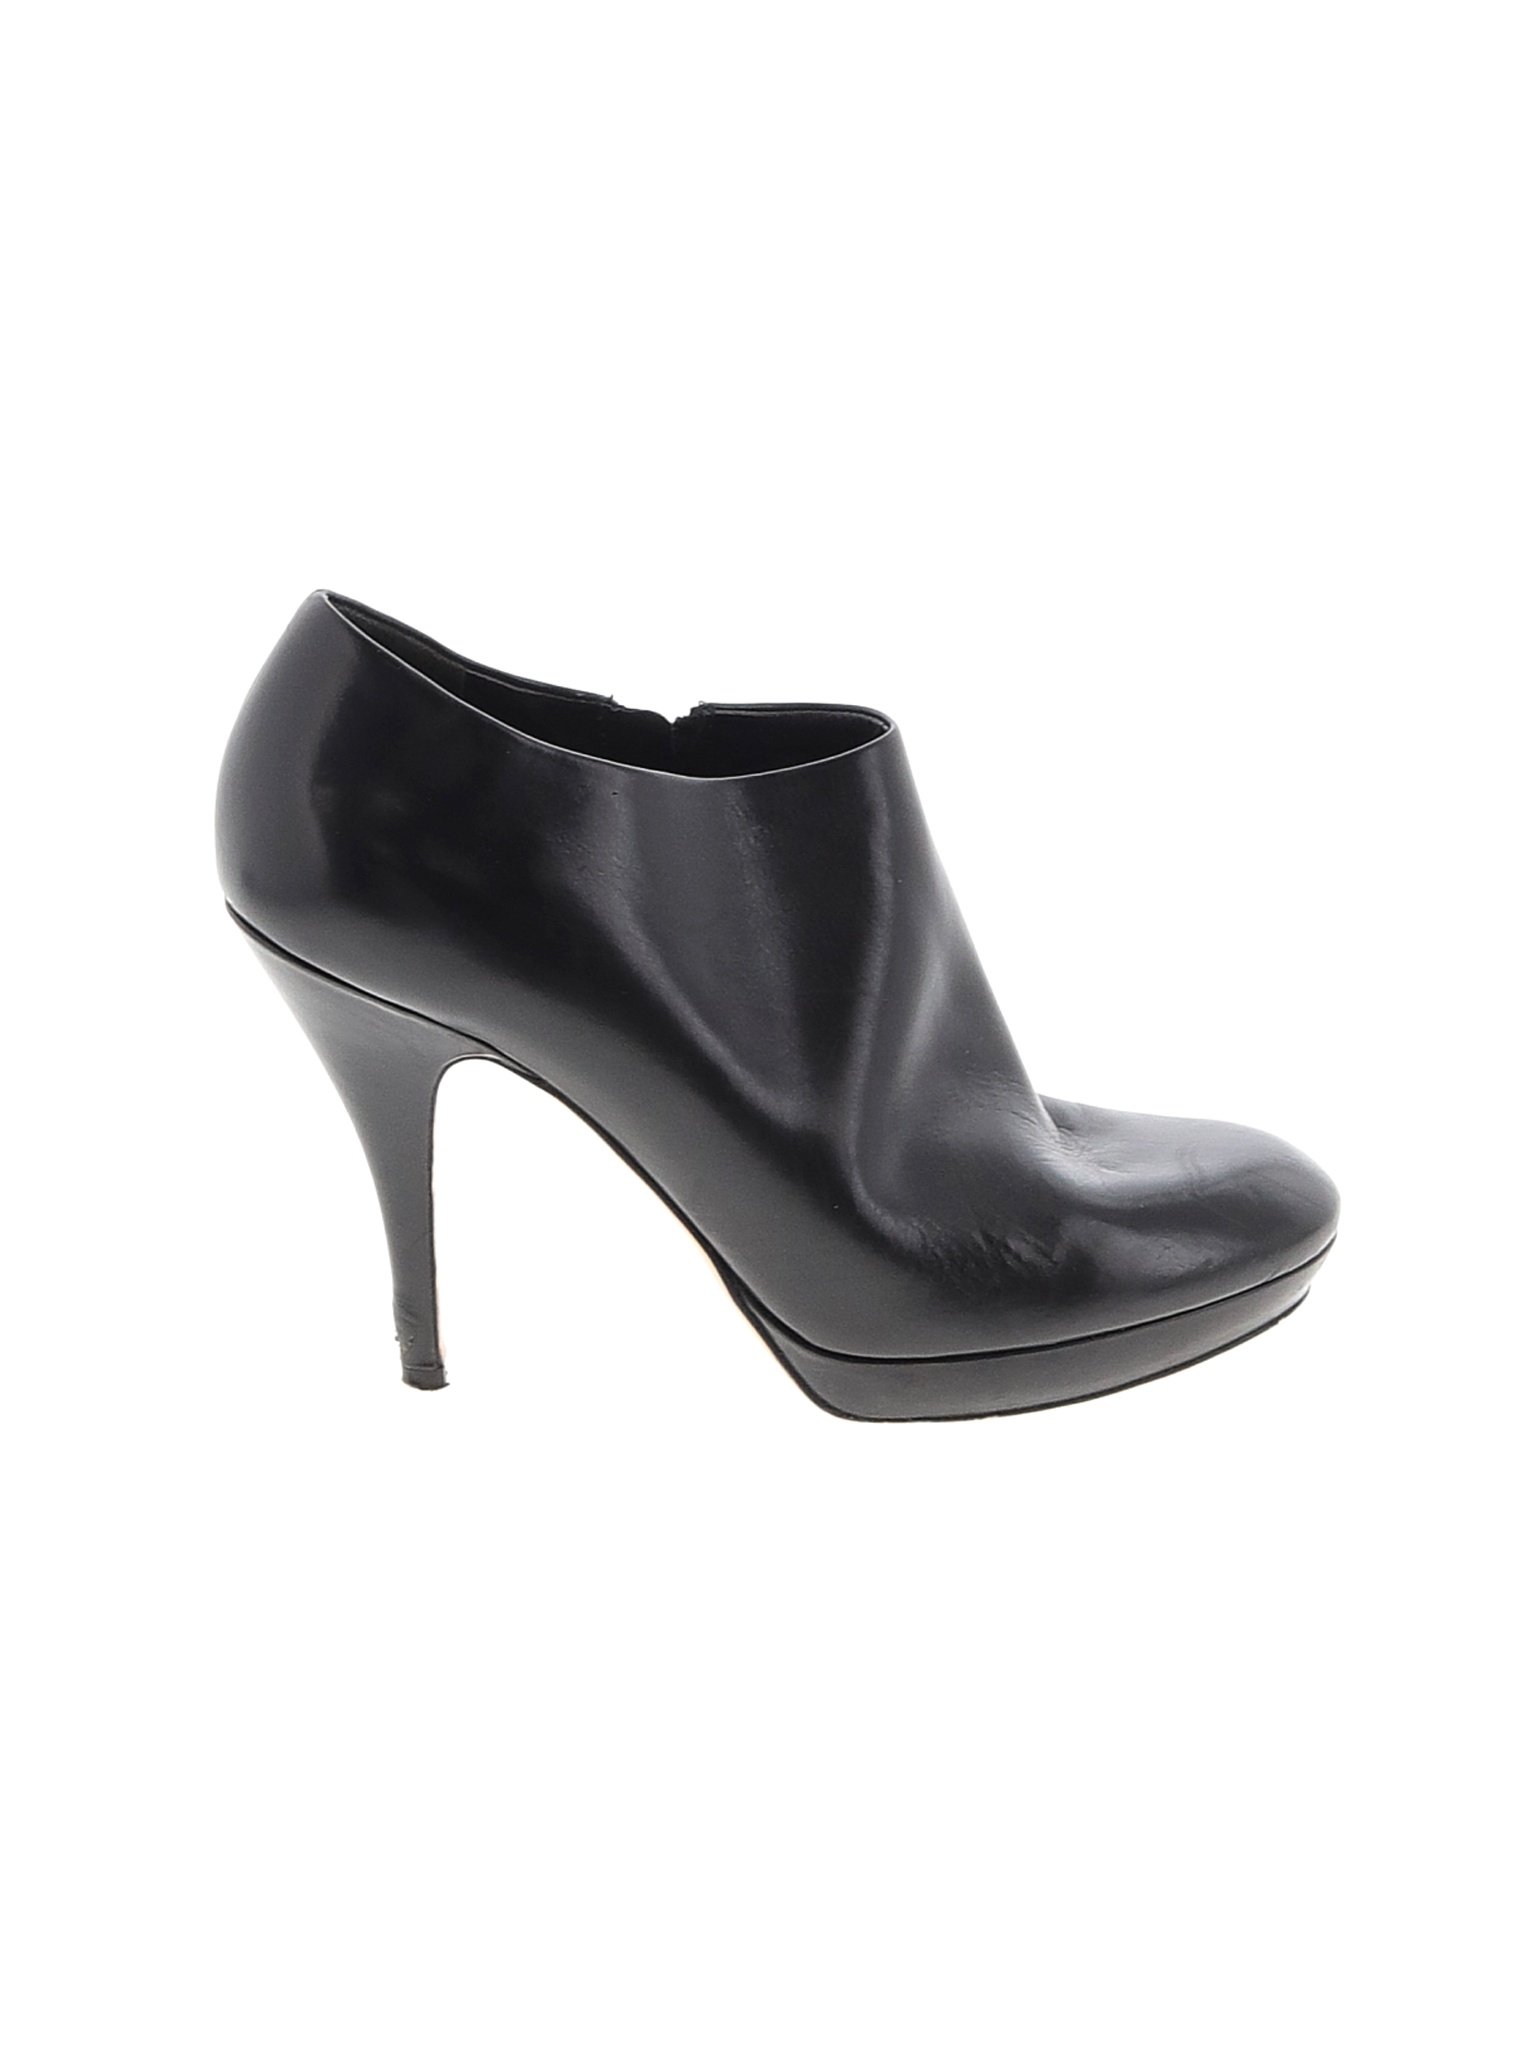 Via Spiga Women Black Ankle Boots US 7.5 | eBay